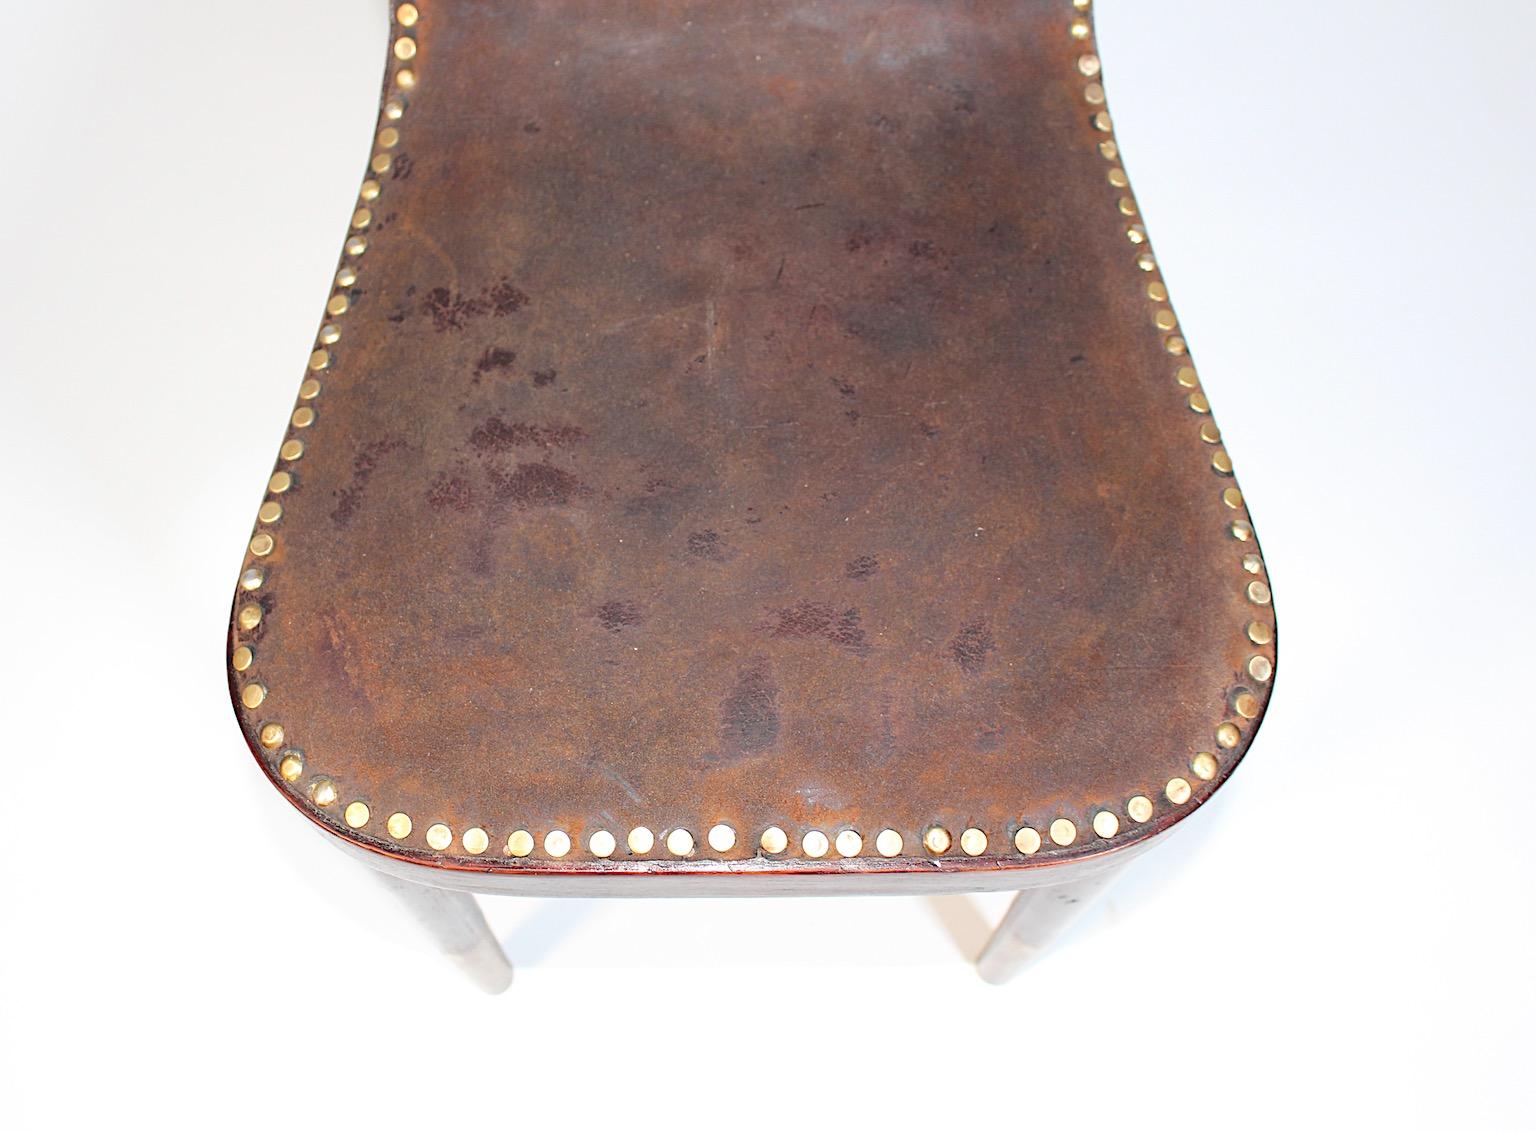 Jugendstil Side Chair Beech Leather by Joseph Urban Gebrüder Thonet 1903 Vienna For Sale 8